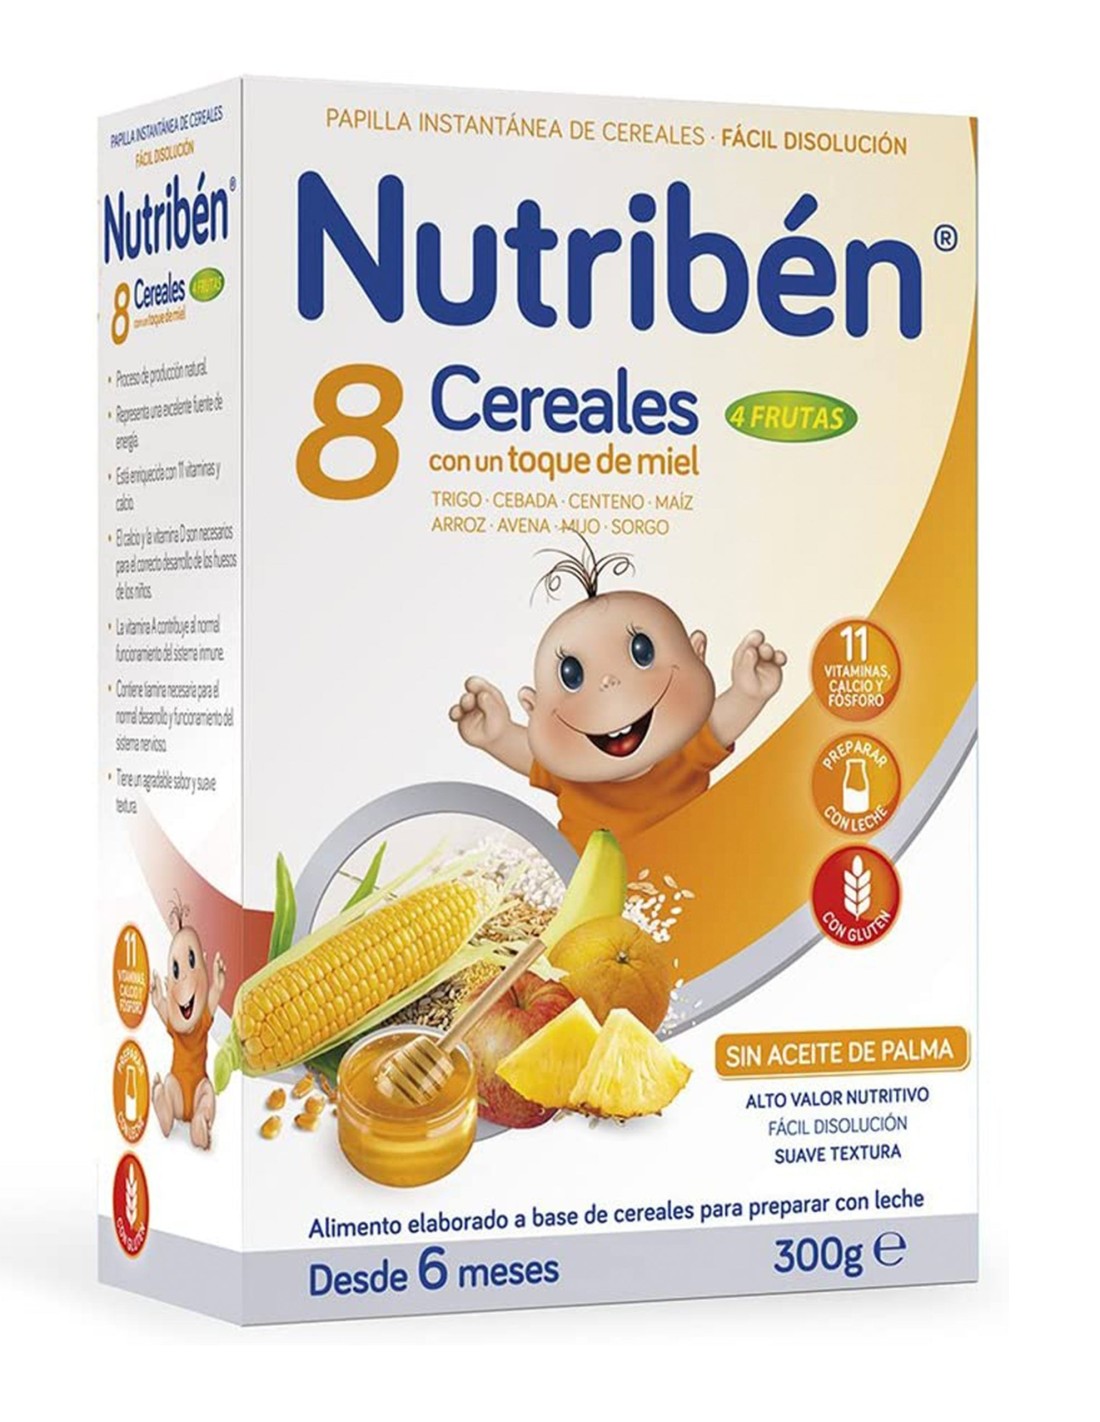 Nutriben - Leche de fórmula y comida de bebé - Leche de Inicio Innova 1